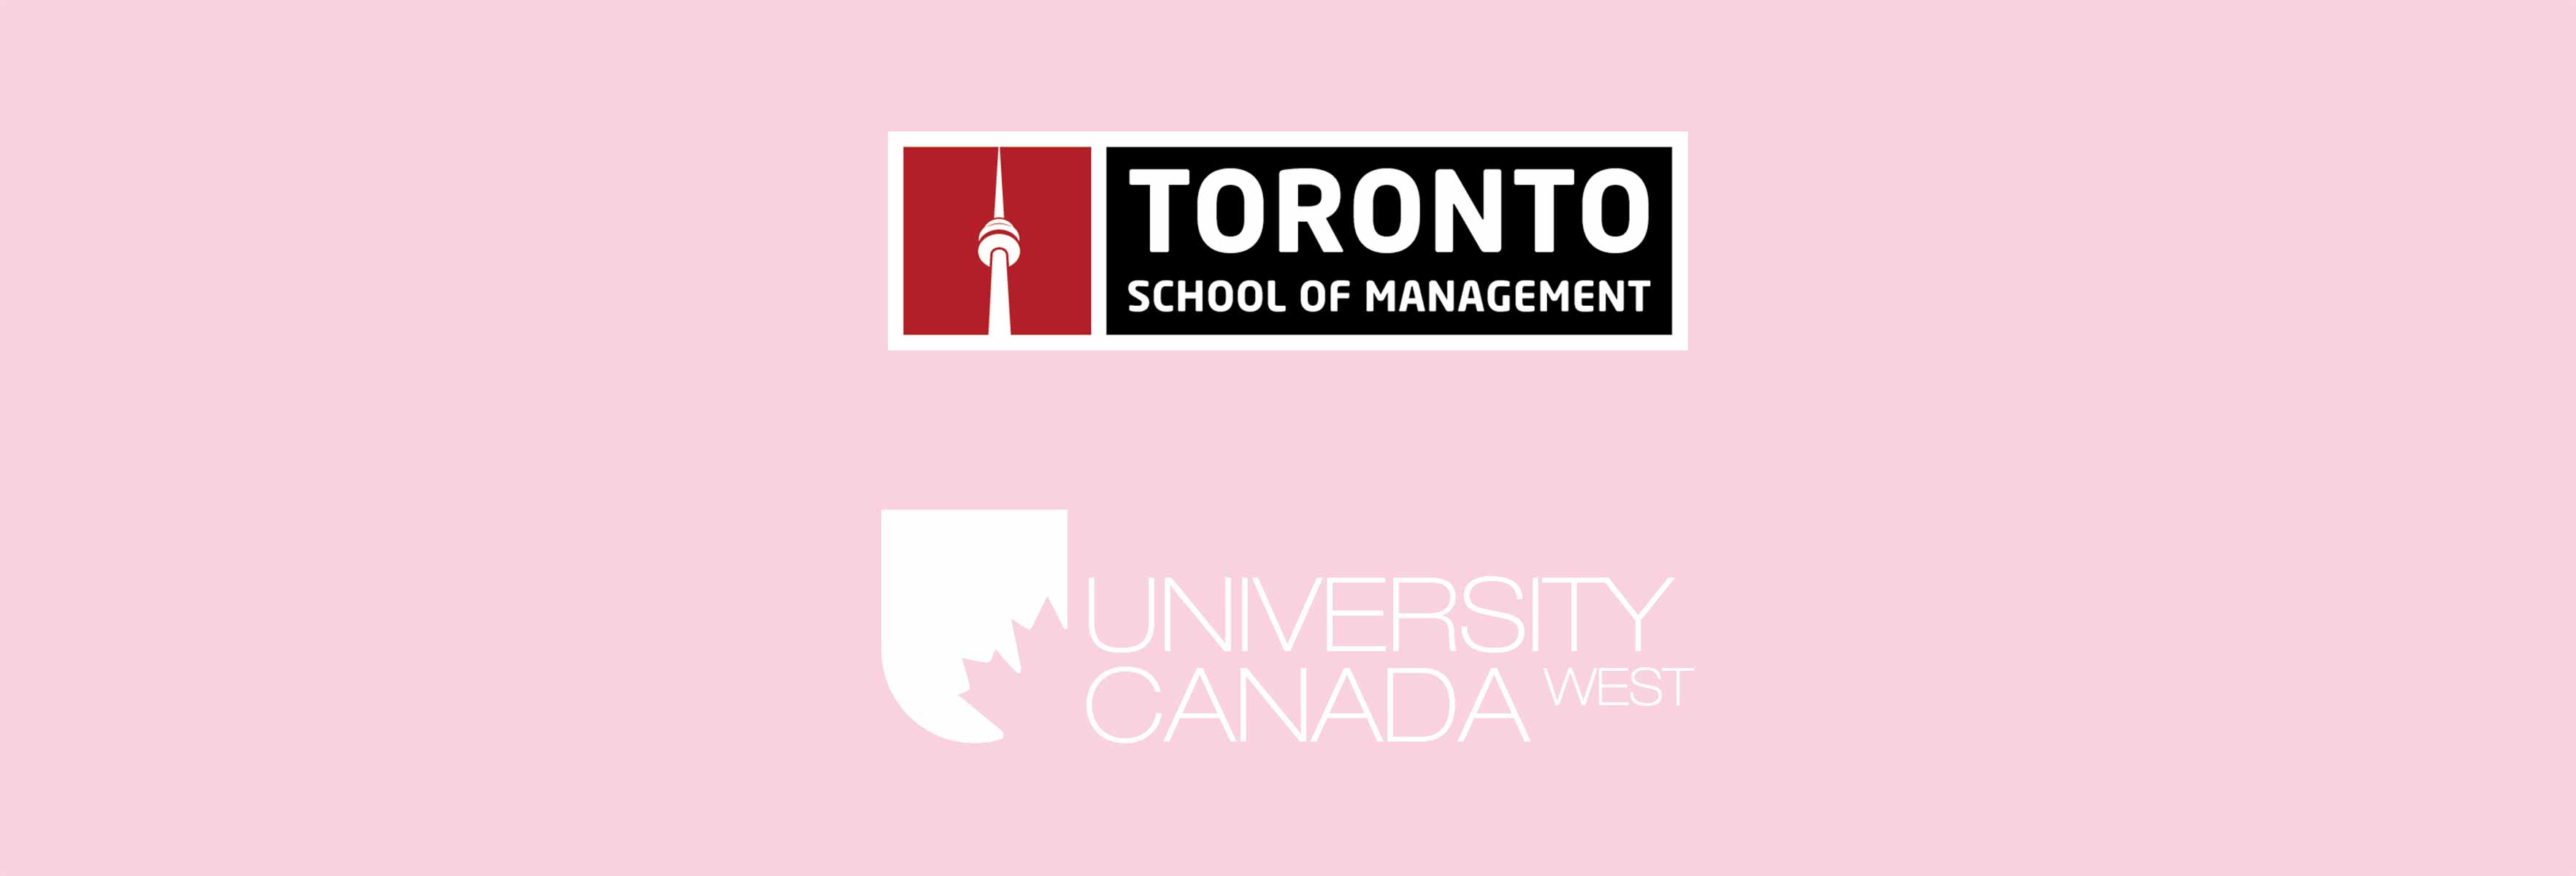 Toronto School of Management and university of Canada logos